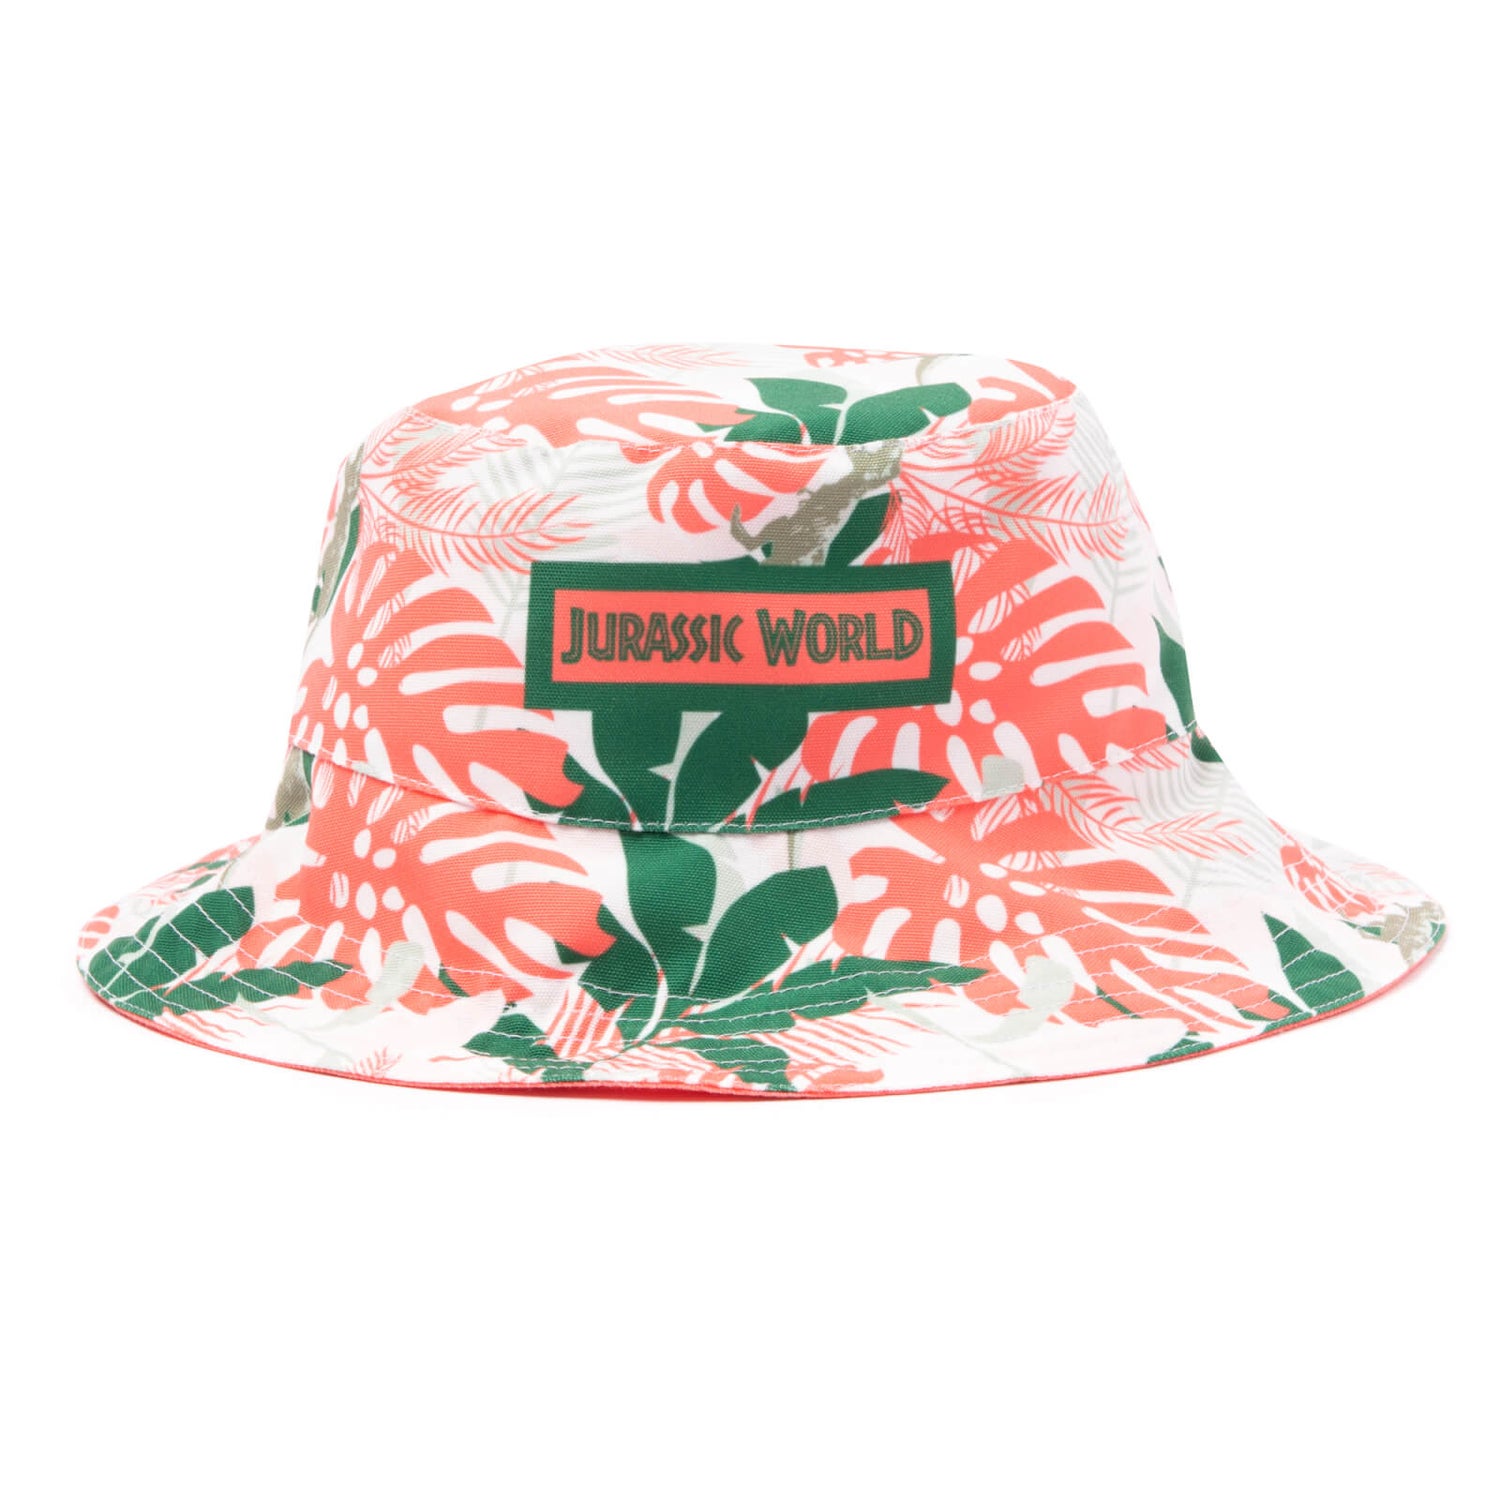 Jurassic World Tropical Bucket Hat